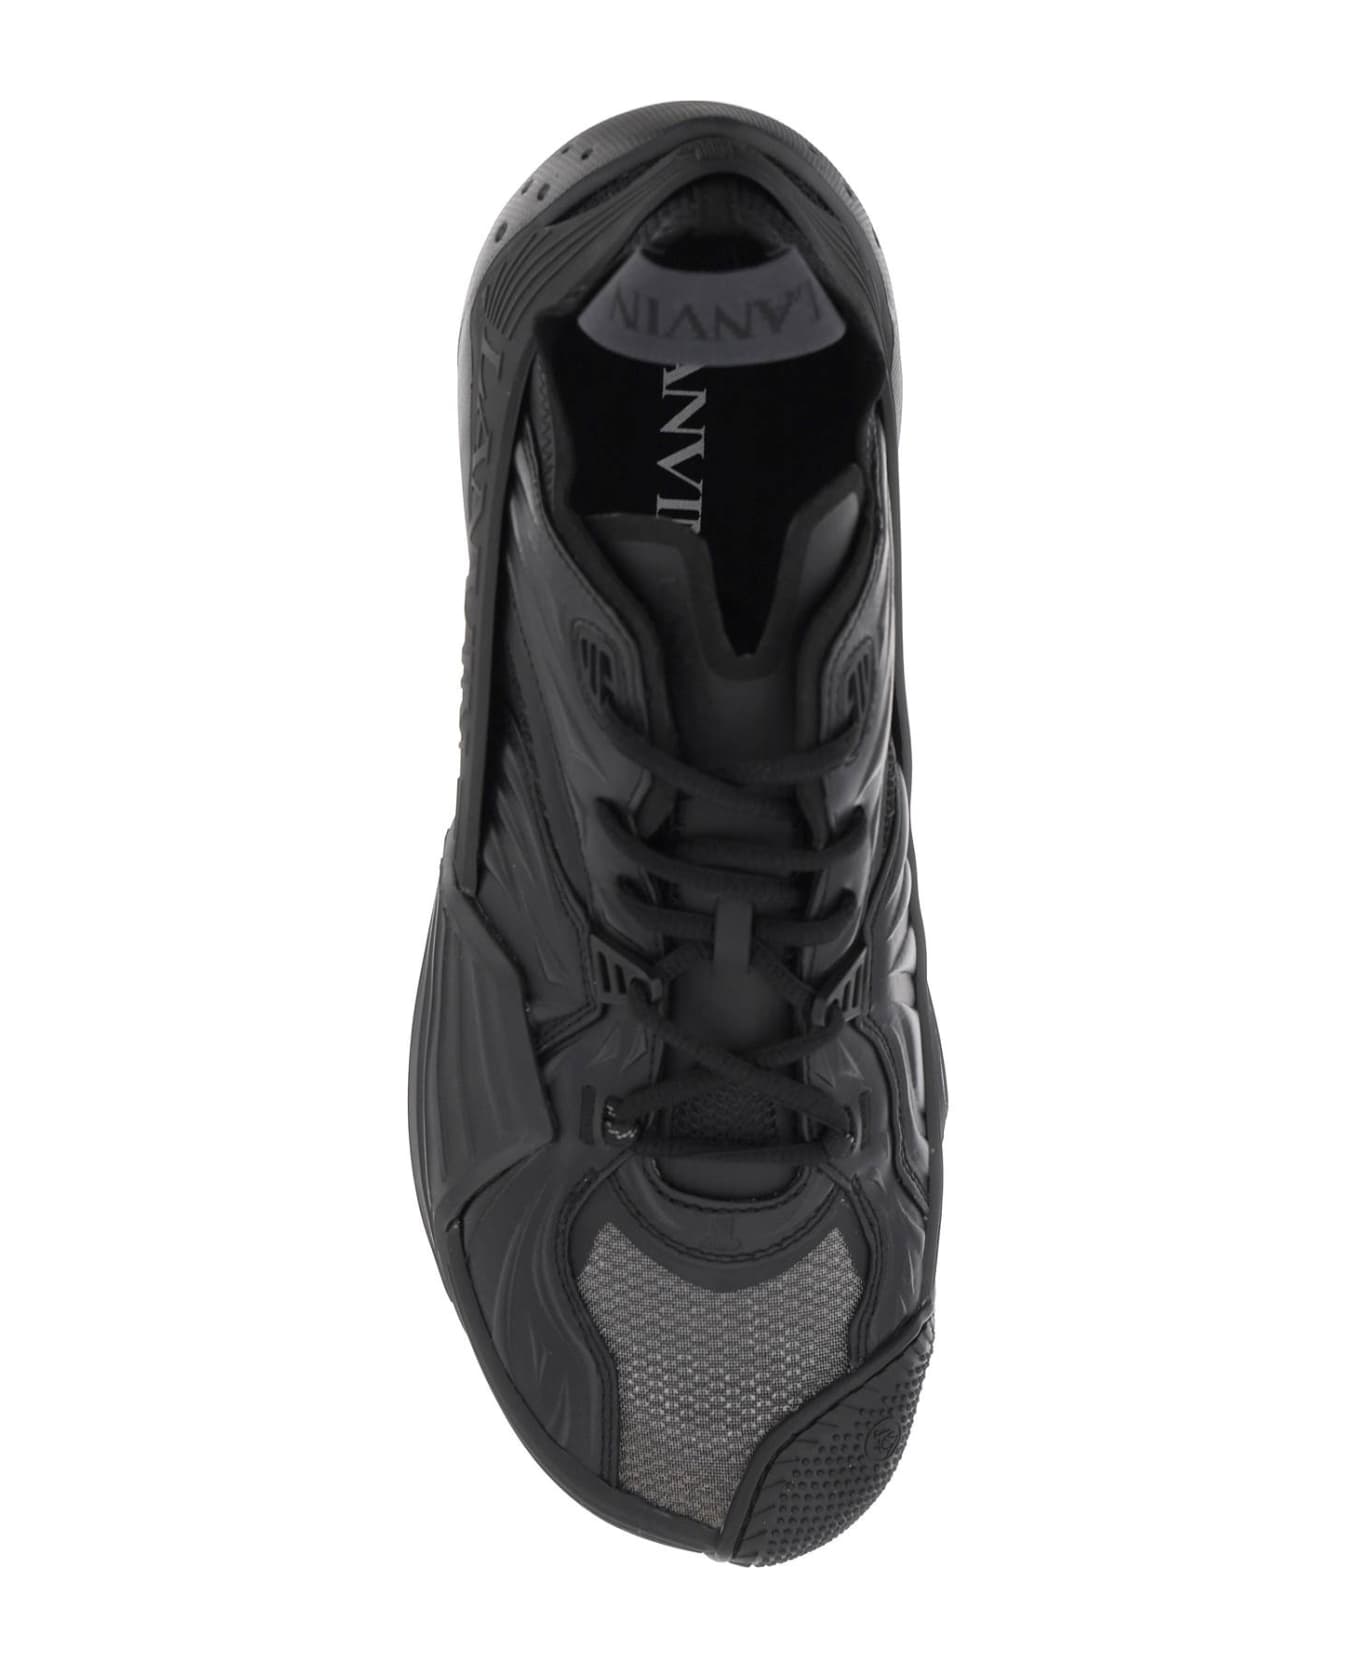 Lanvin Sneakers - BLACK (Black)